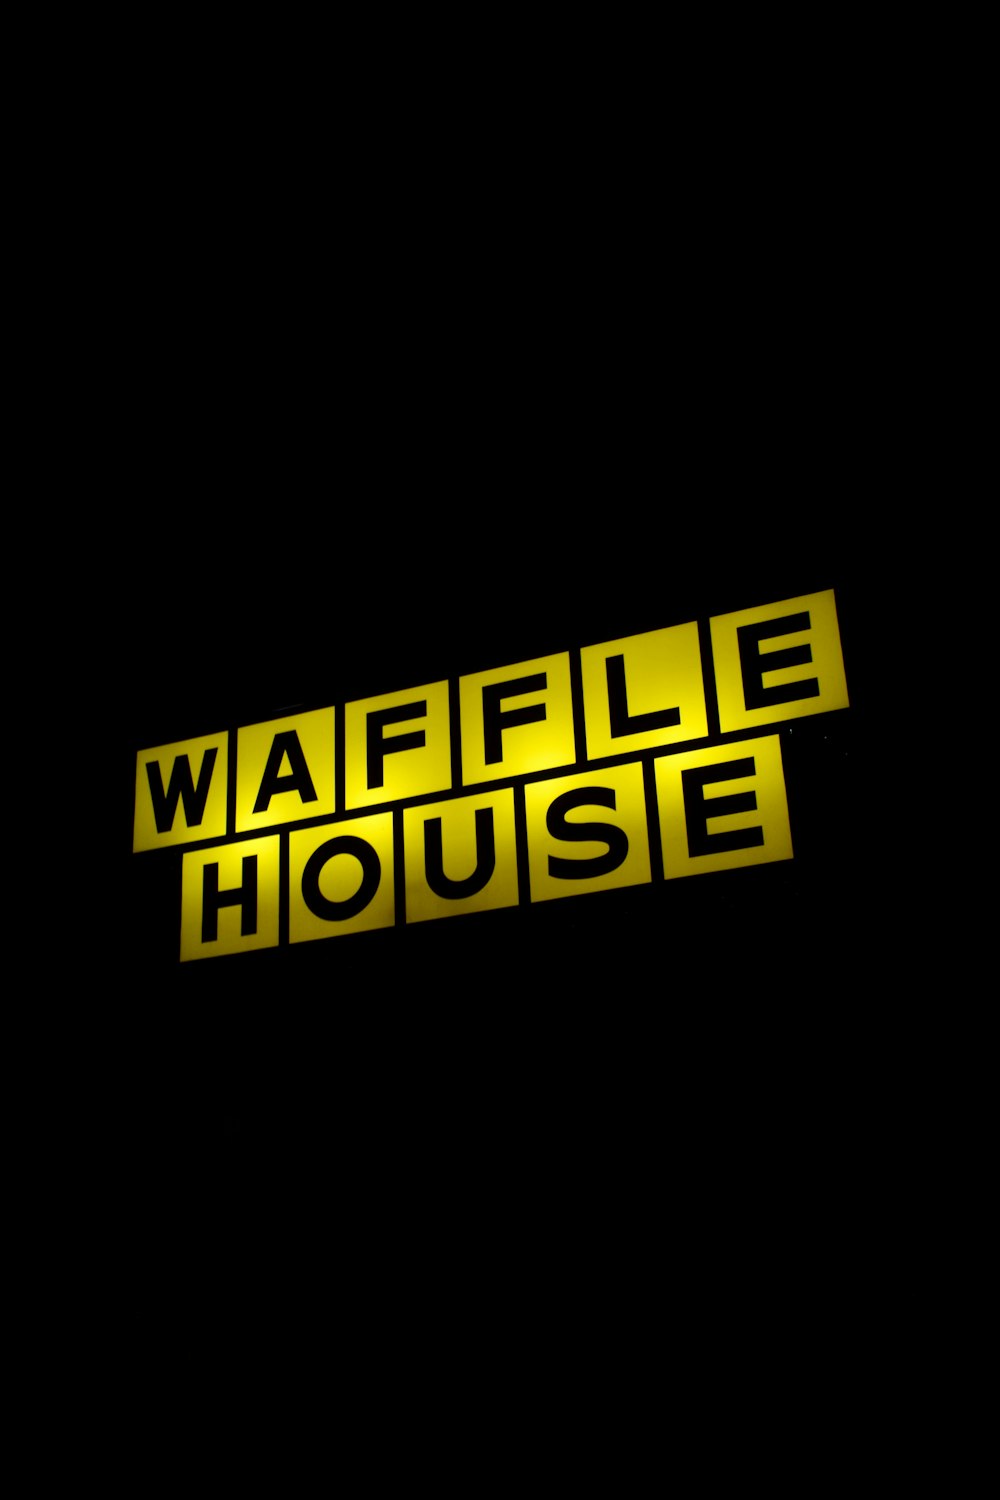 the waffle house logo on a black background